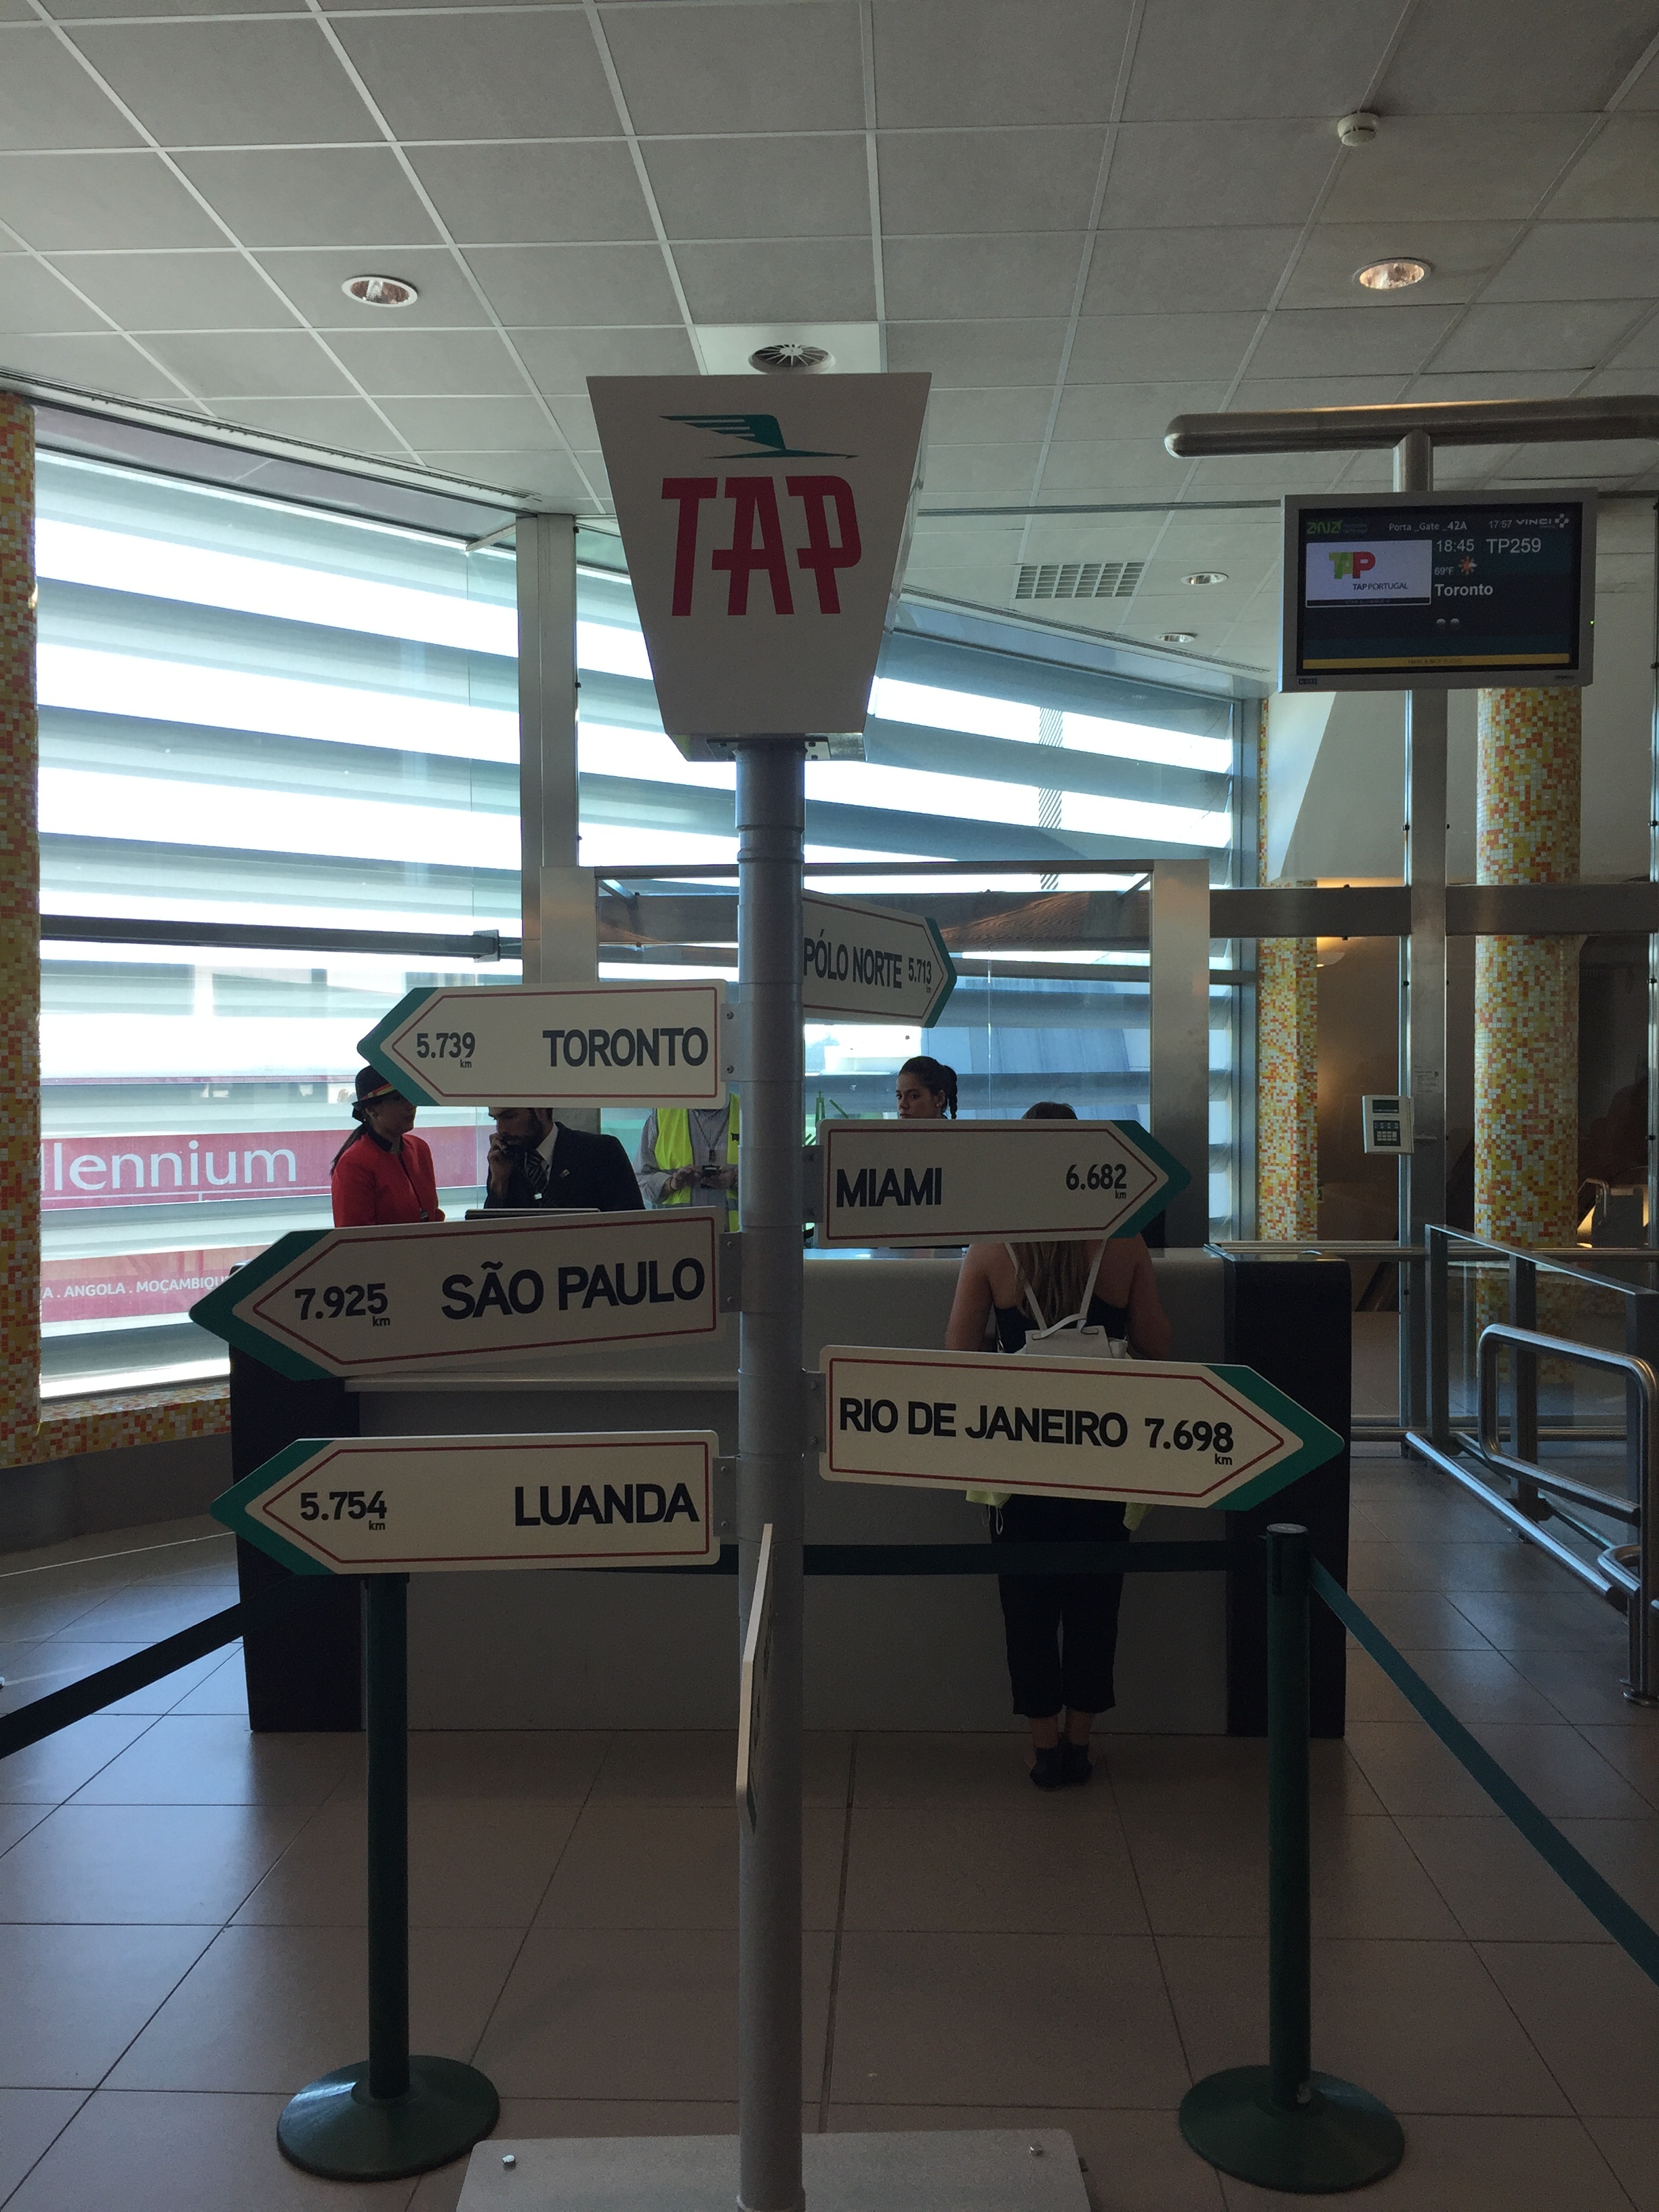 TAP Retrojet Links Past & Future of Portuguese Airline — Allplane